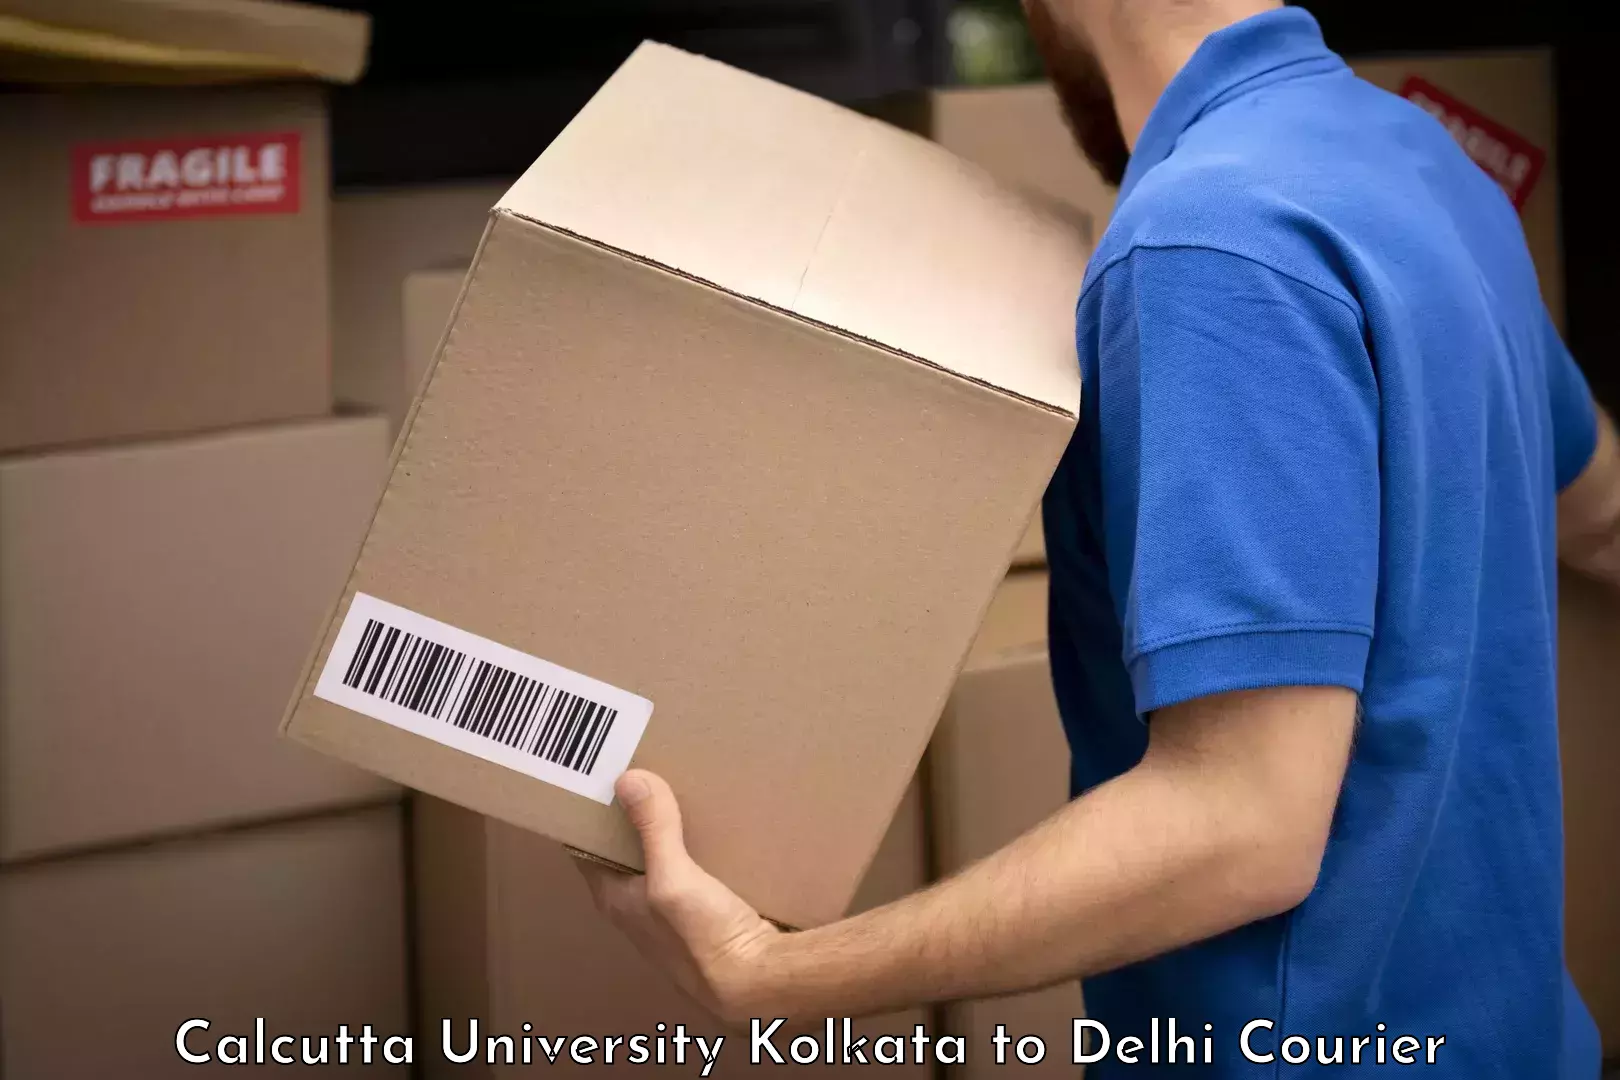 Luggage transport service Calcutta University Kolkata to Lodhi Road